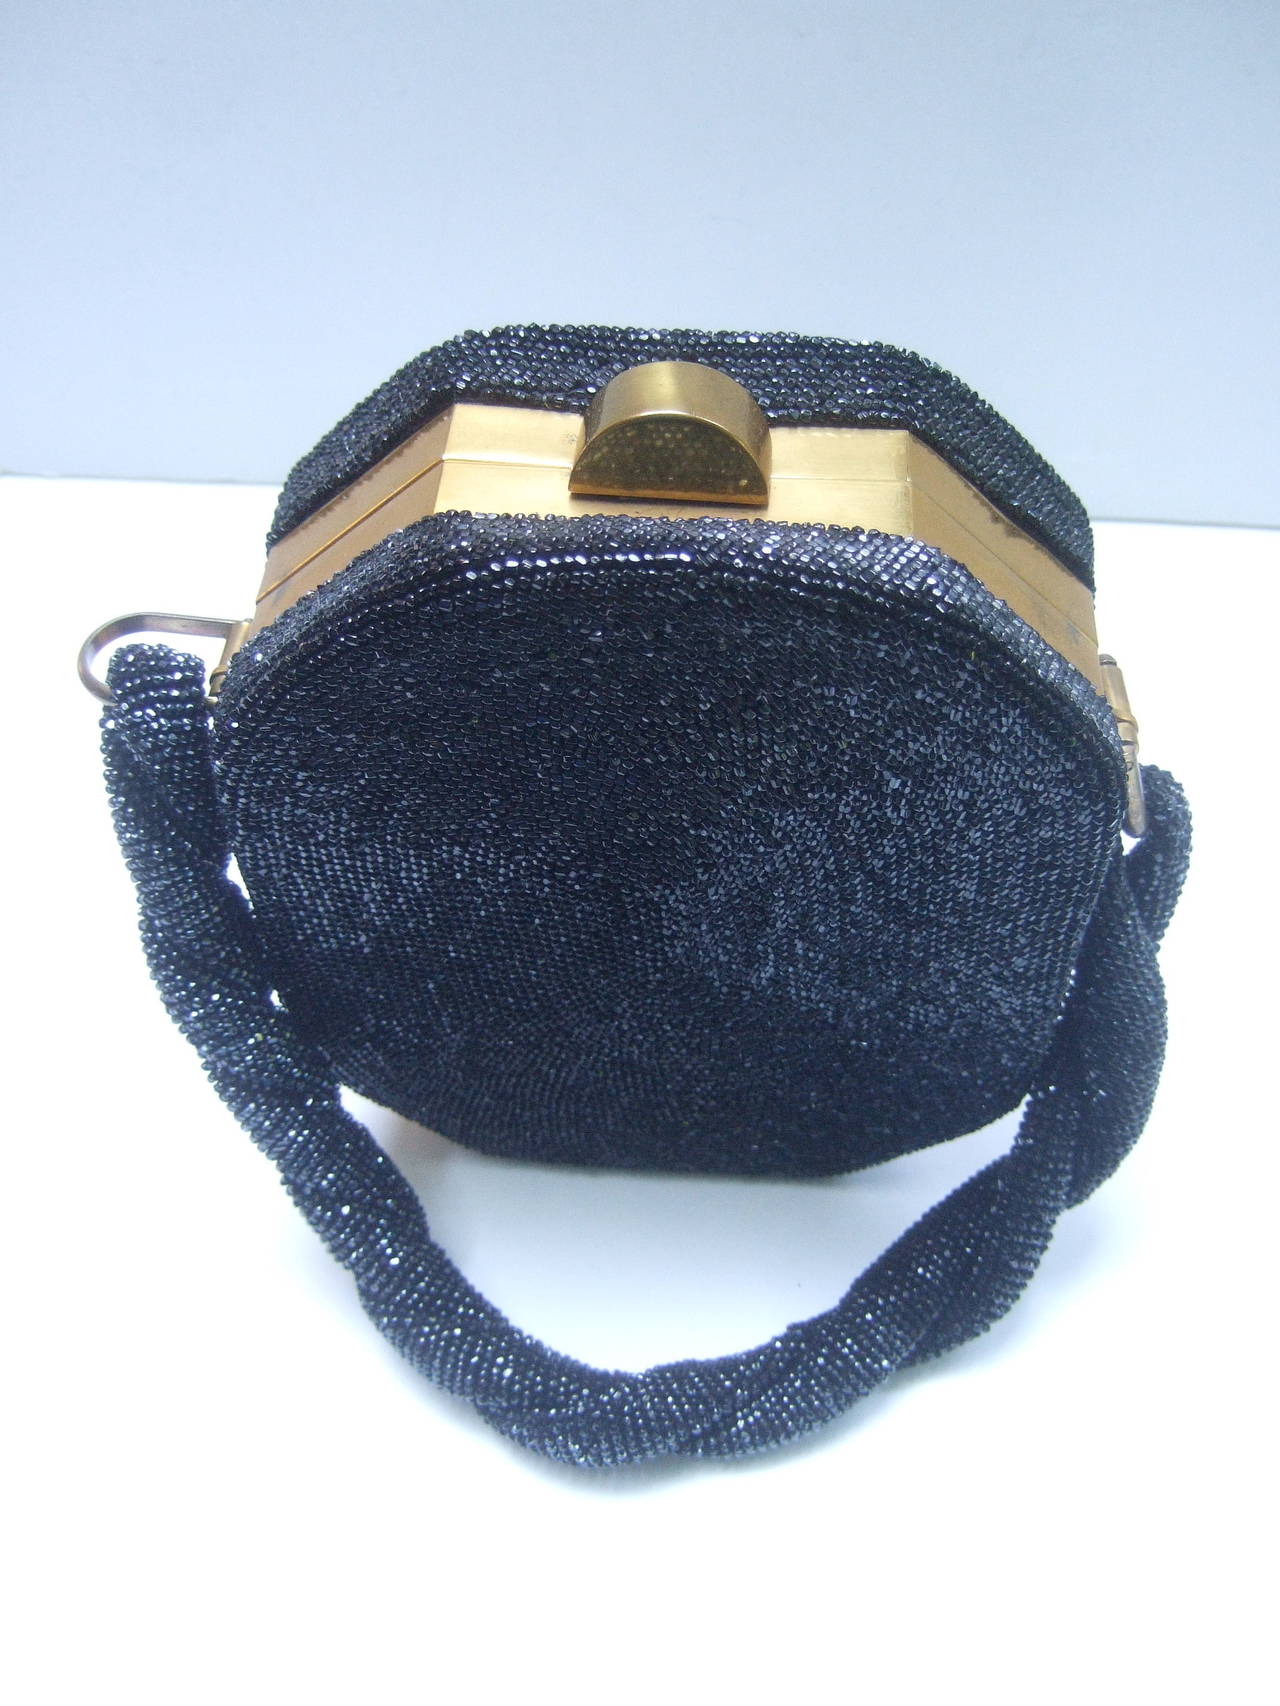 1940s Art Deco Black Carnival Glass Beaded Handbag For Sale 1